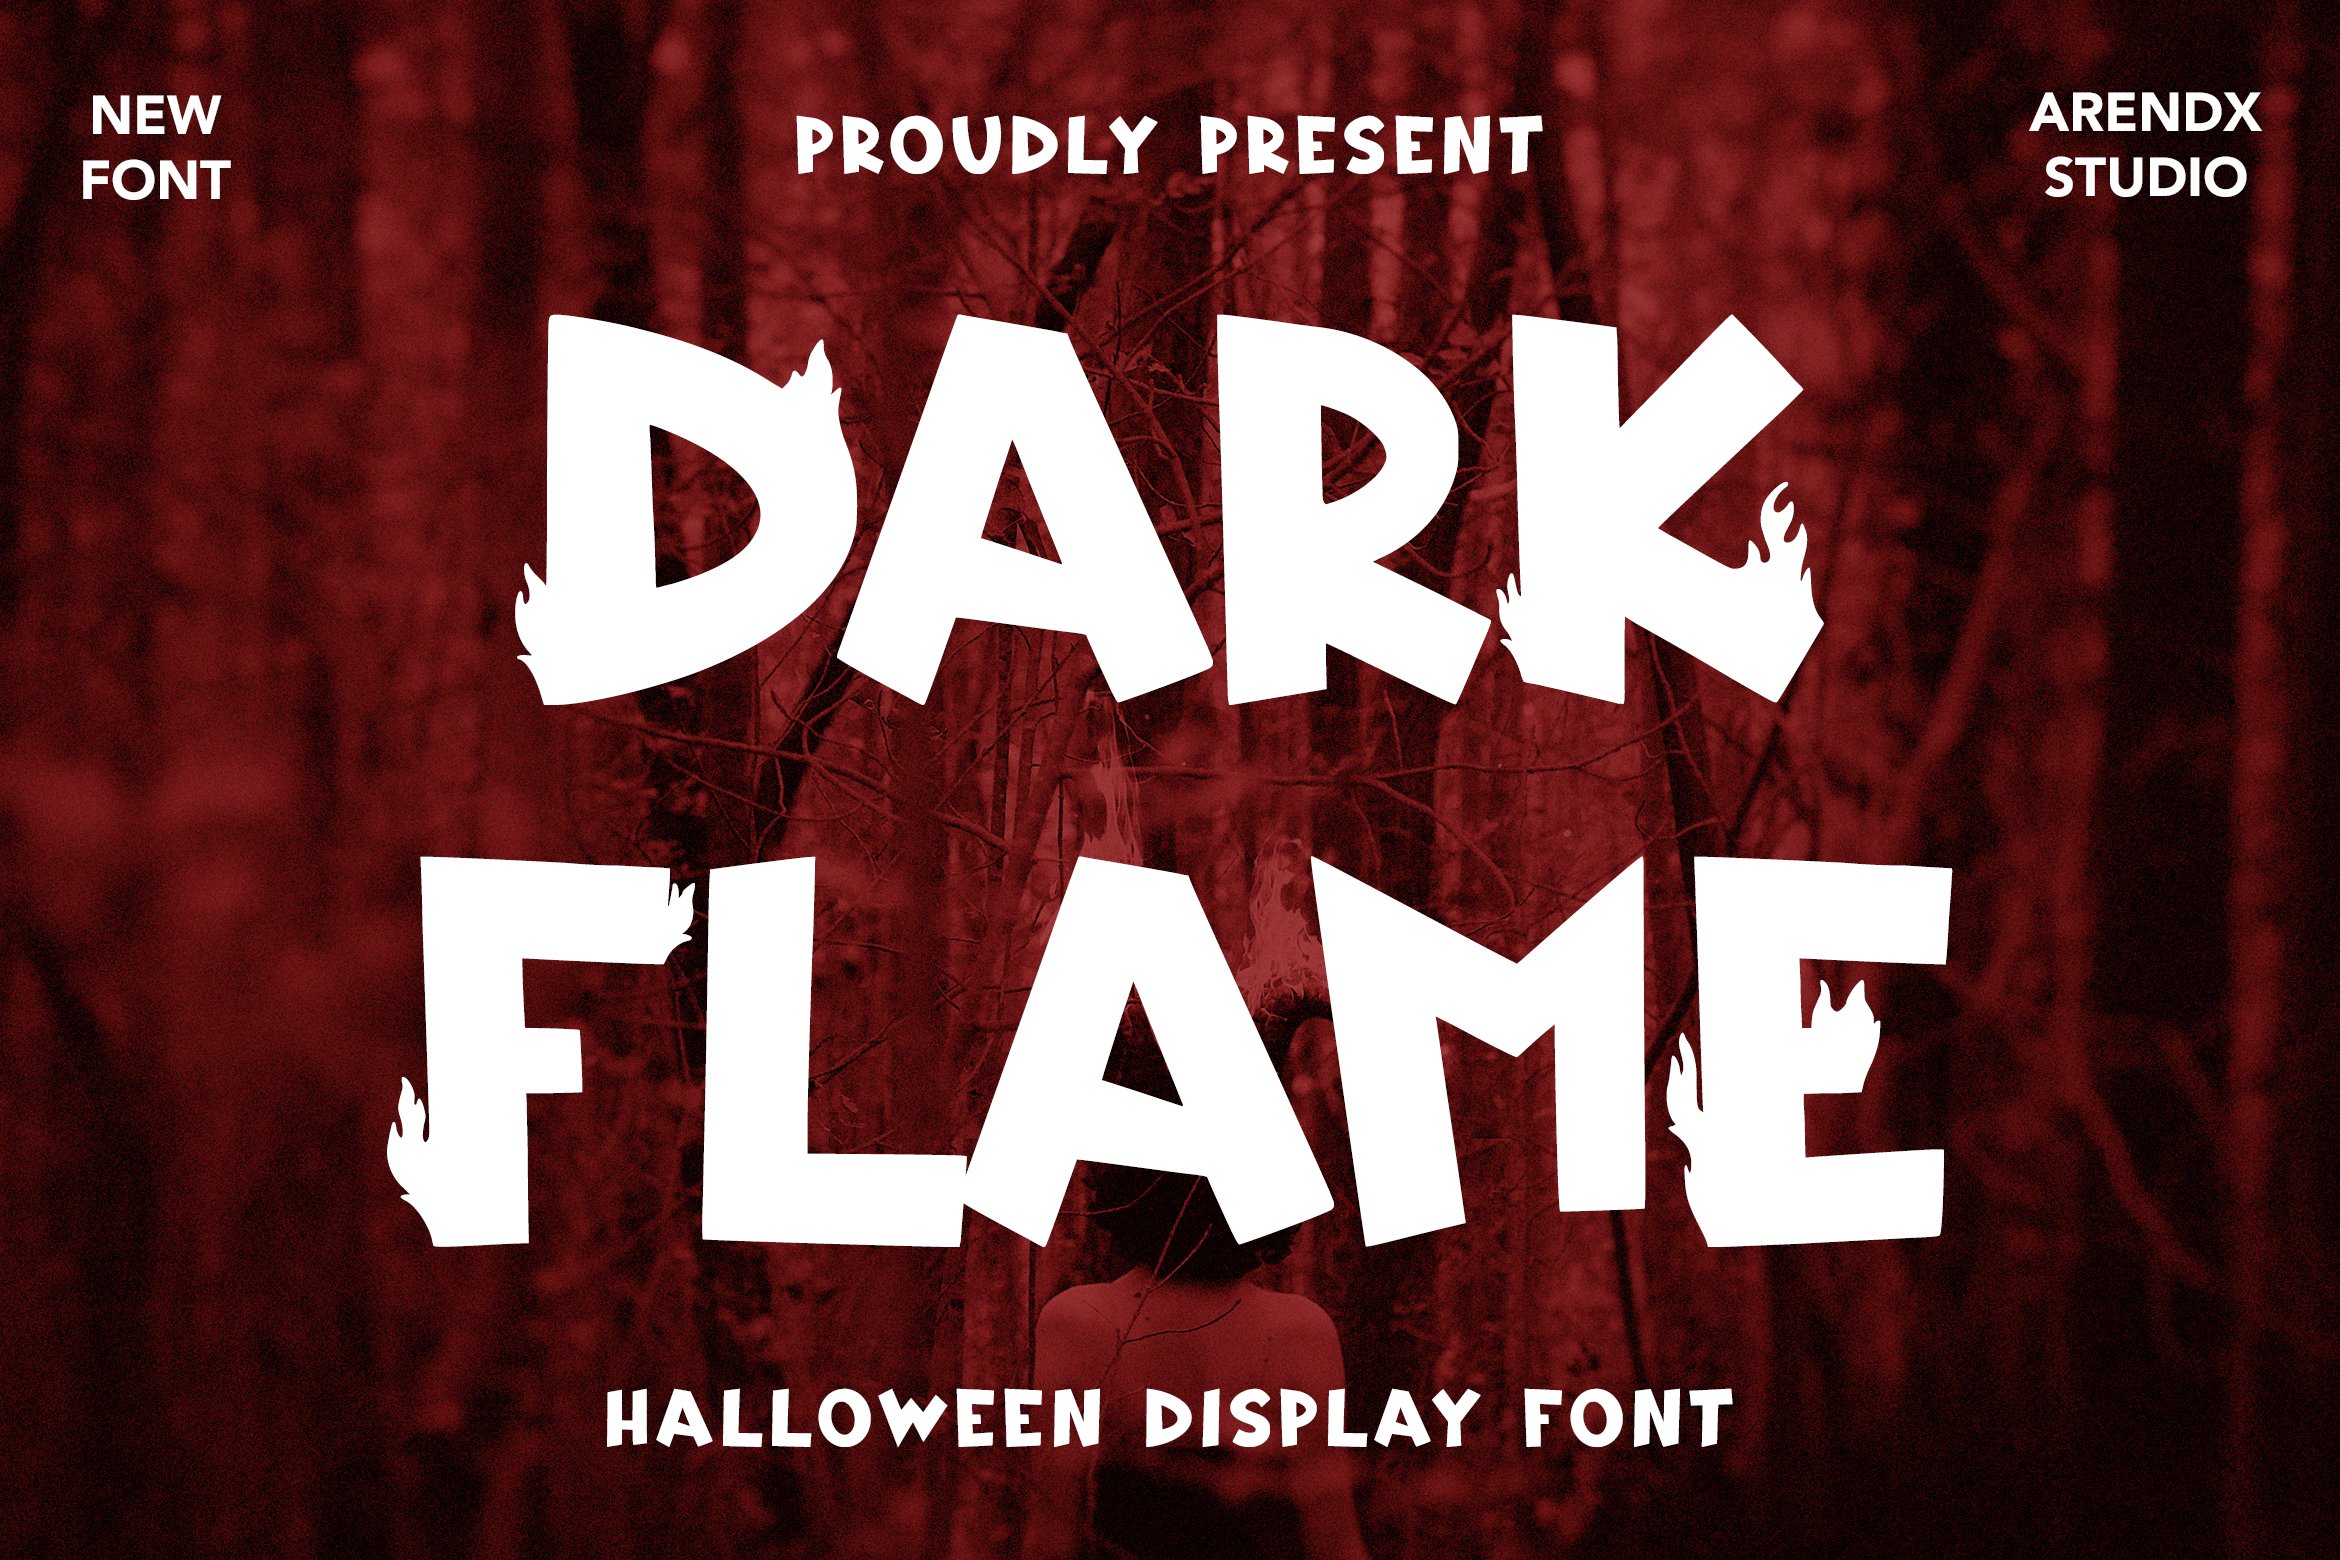 Dark Flame - Halloween Display Font cover image.